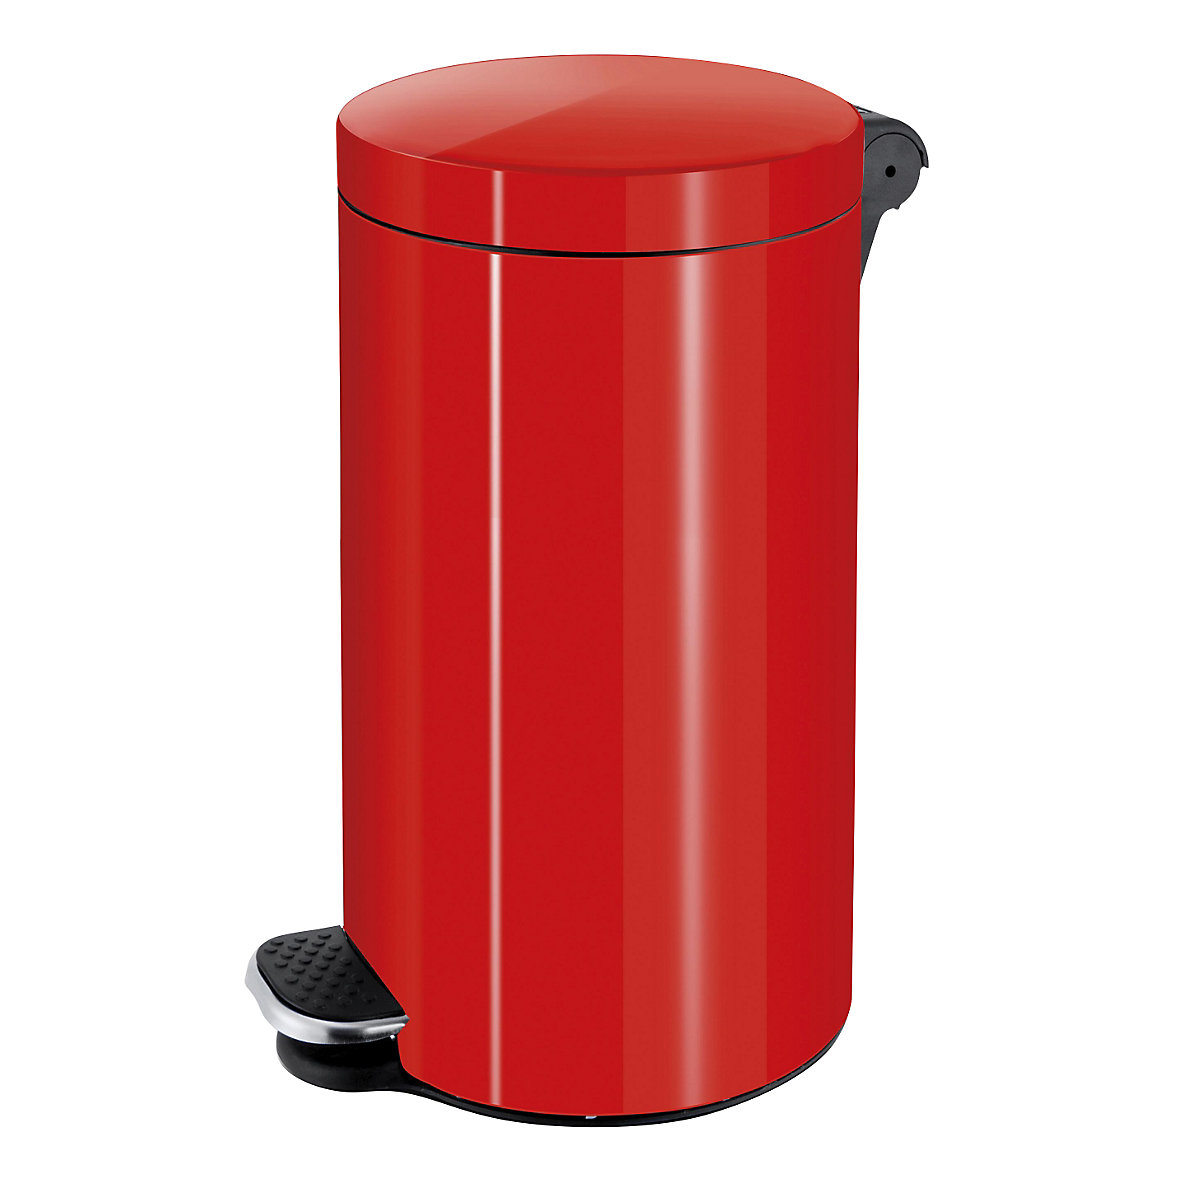 Spremnik za otpad s papučicom, volumen 30 l, VxØ 650 x 300 mm, u crvenoj boji